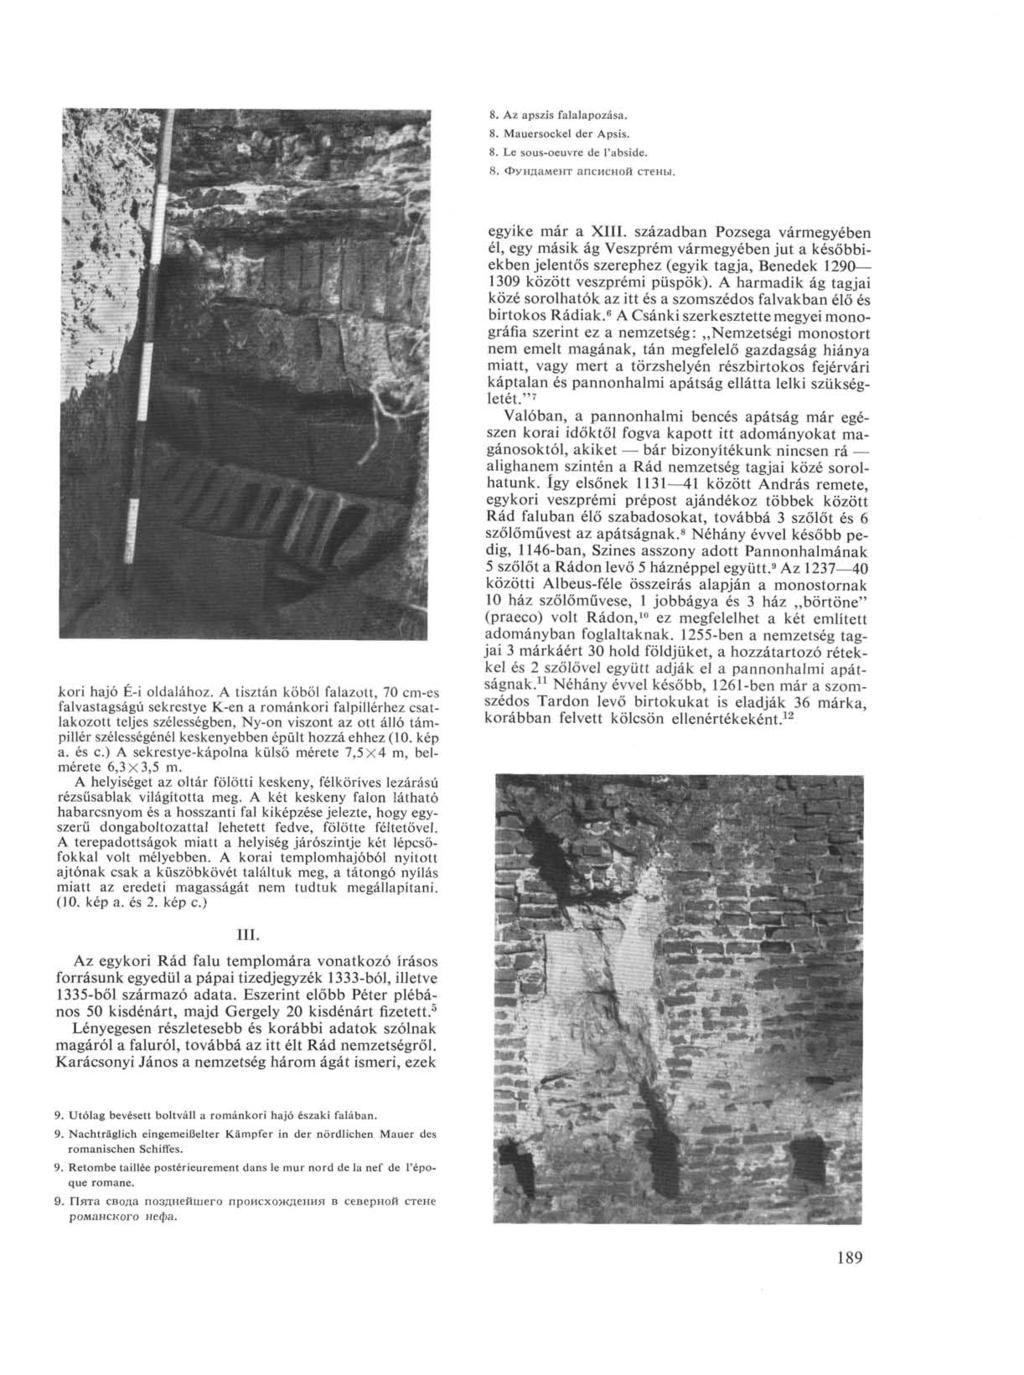 8. Az apszis falalapozása. 8. Mauersockel der Apsis. 8. Le sous-oeuvre de l'abside. 8. Фундамент апсисной стены. kori hajó É-i oldalához.